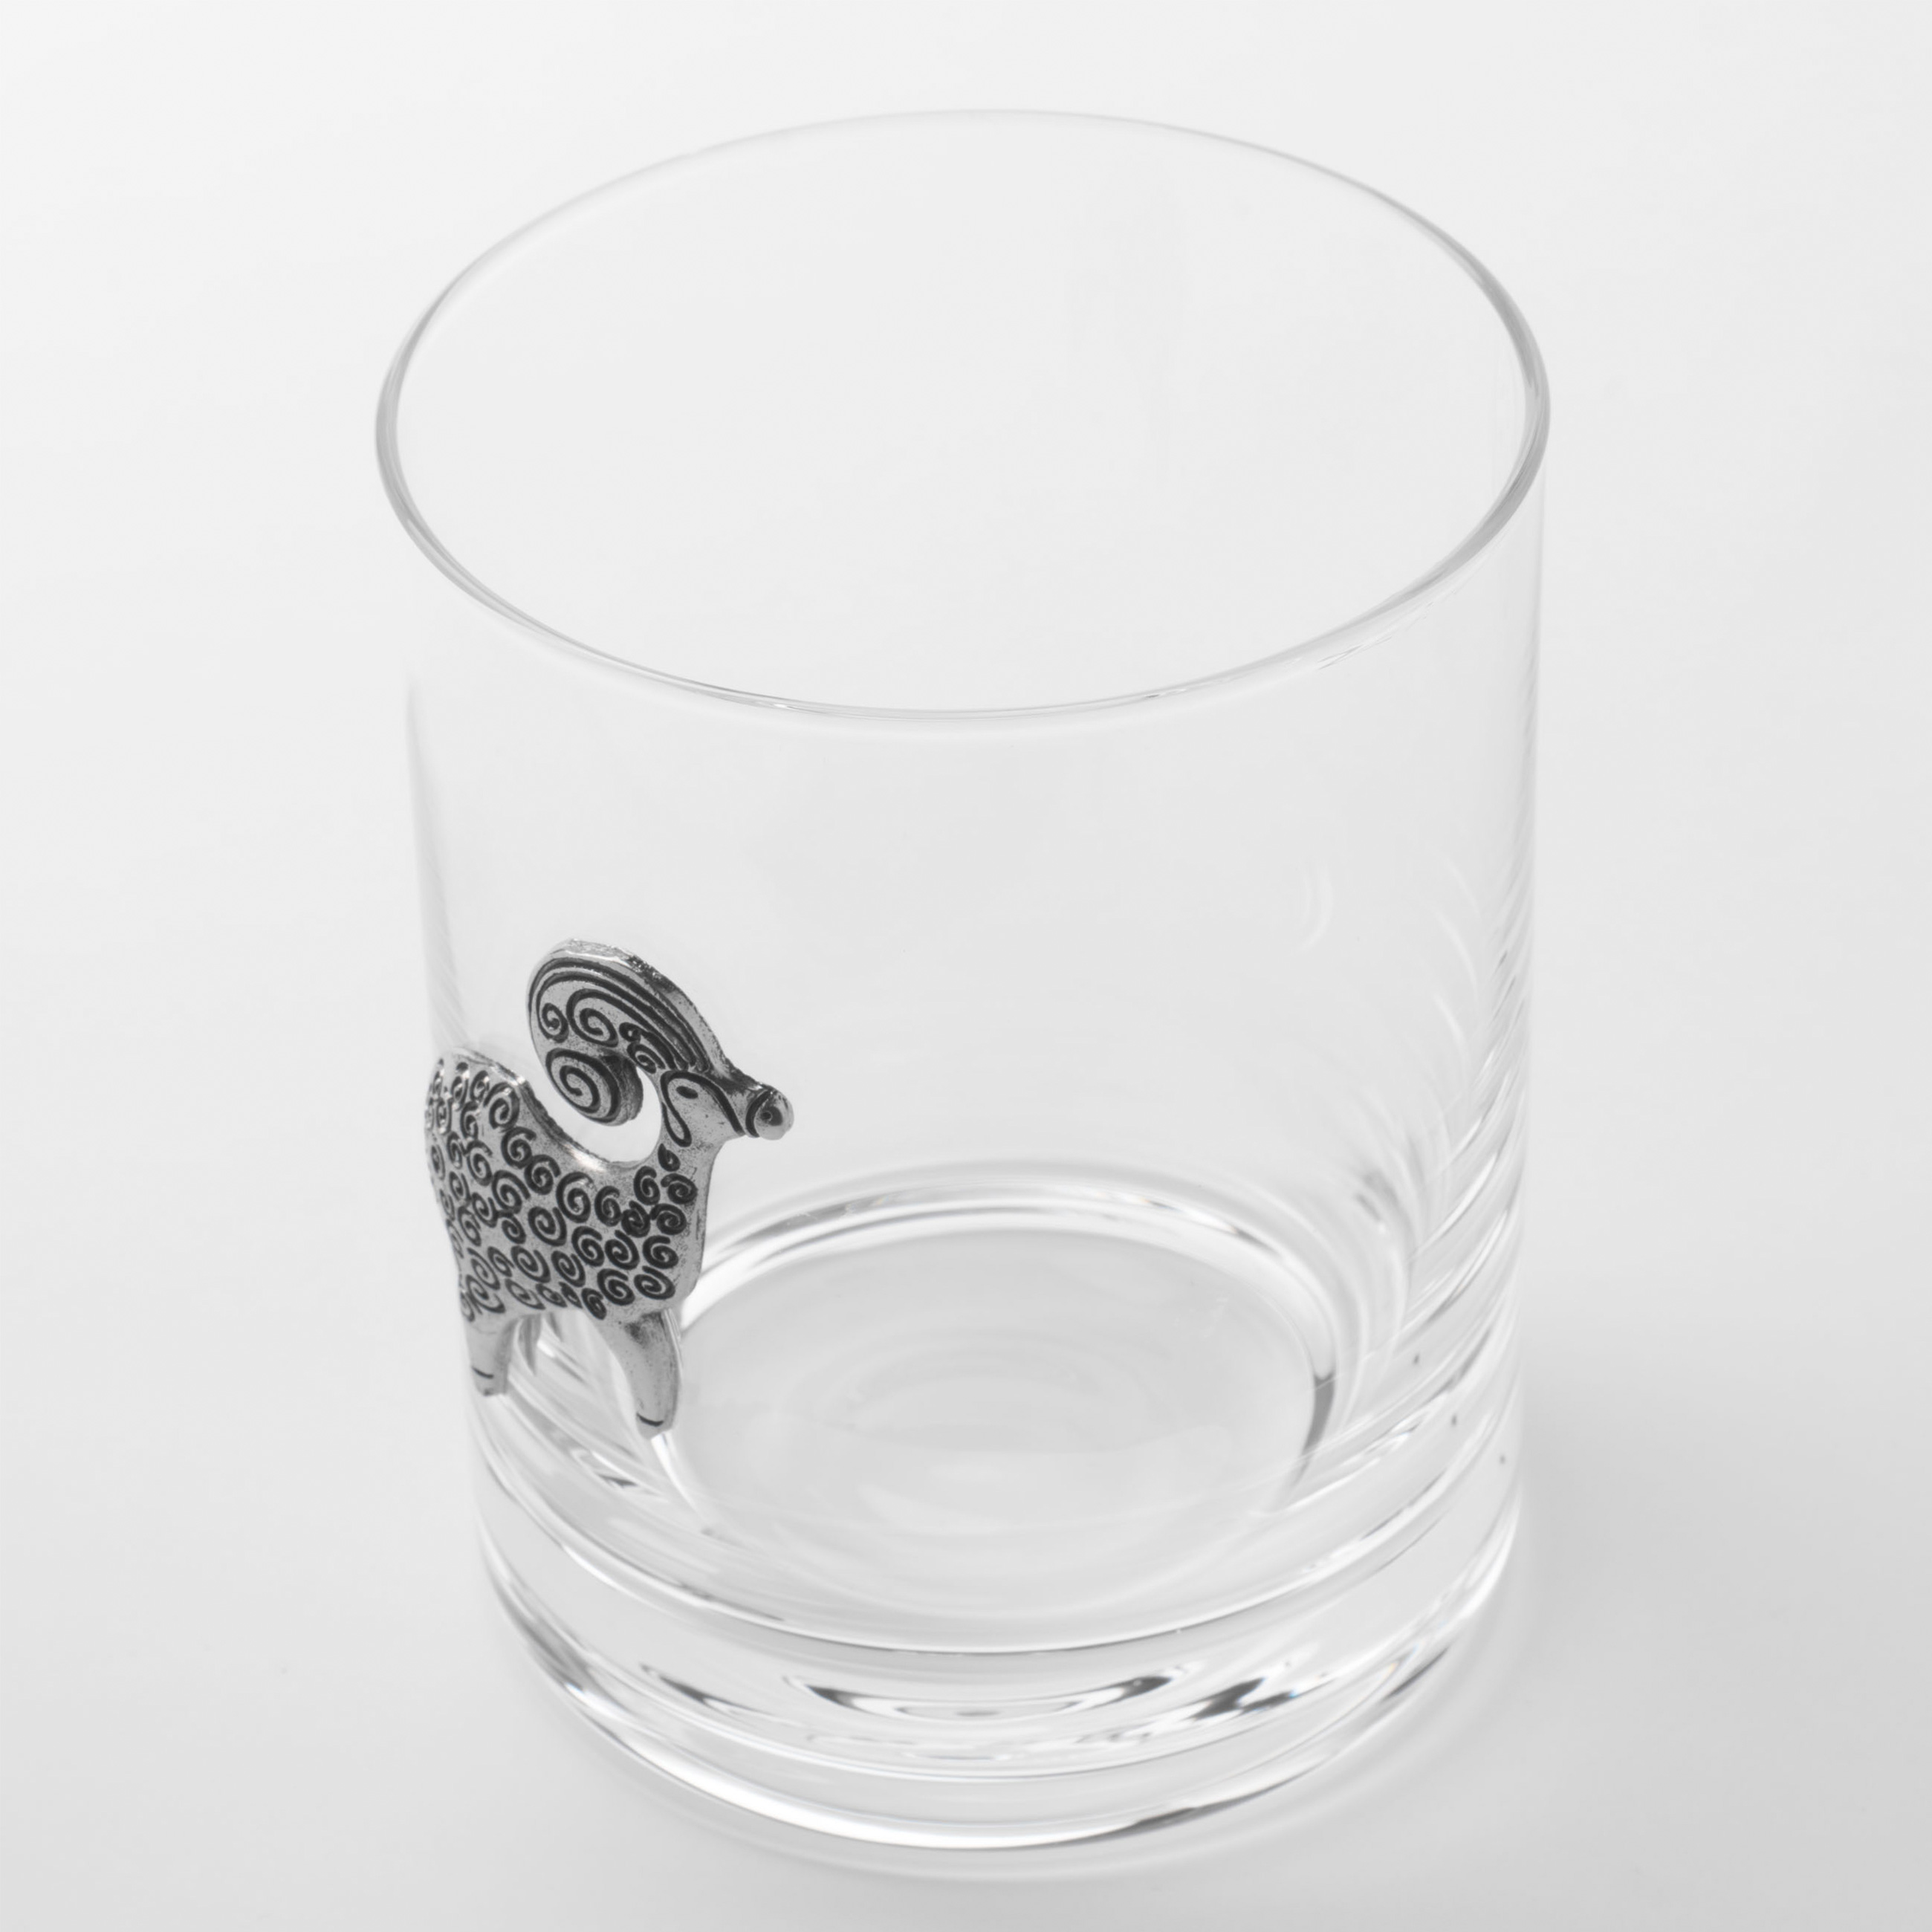 Стакан для виски, 340 мл, стекло/металл, серебристый, Овен, Zodiac изображение № 2